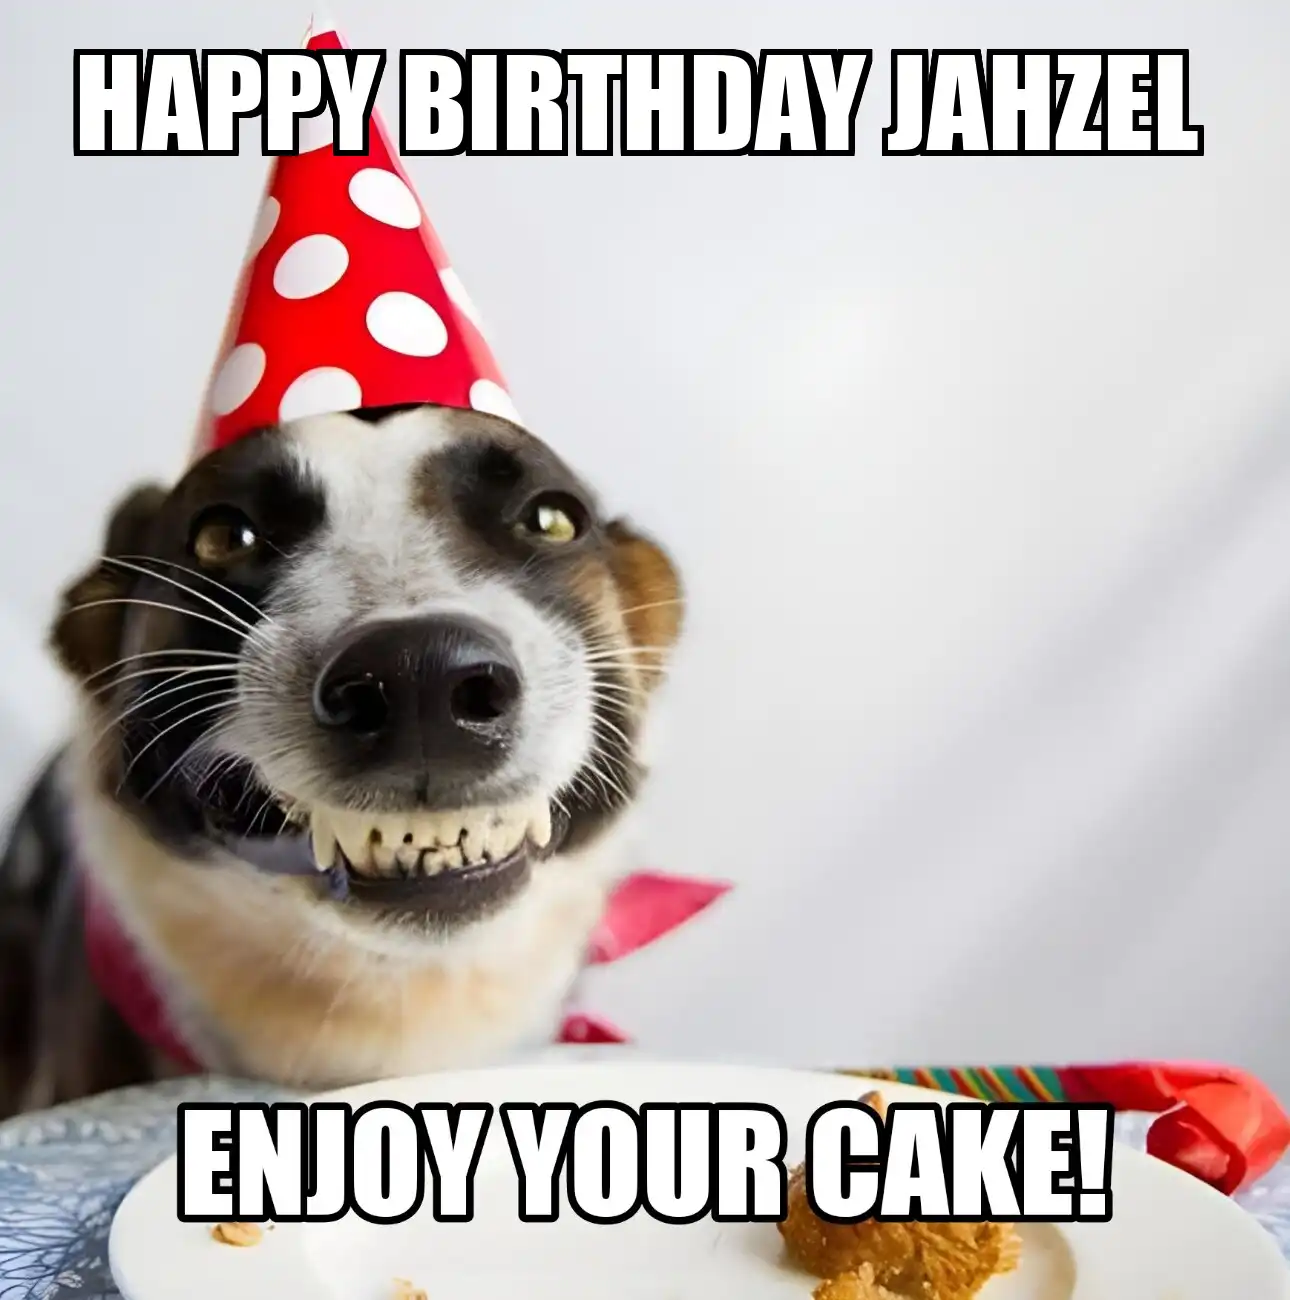 Happy Birthday Jahzel Enjoy Your Cake Dog Meme